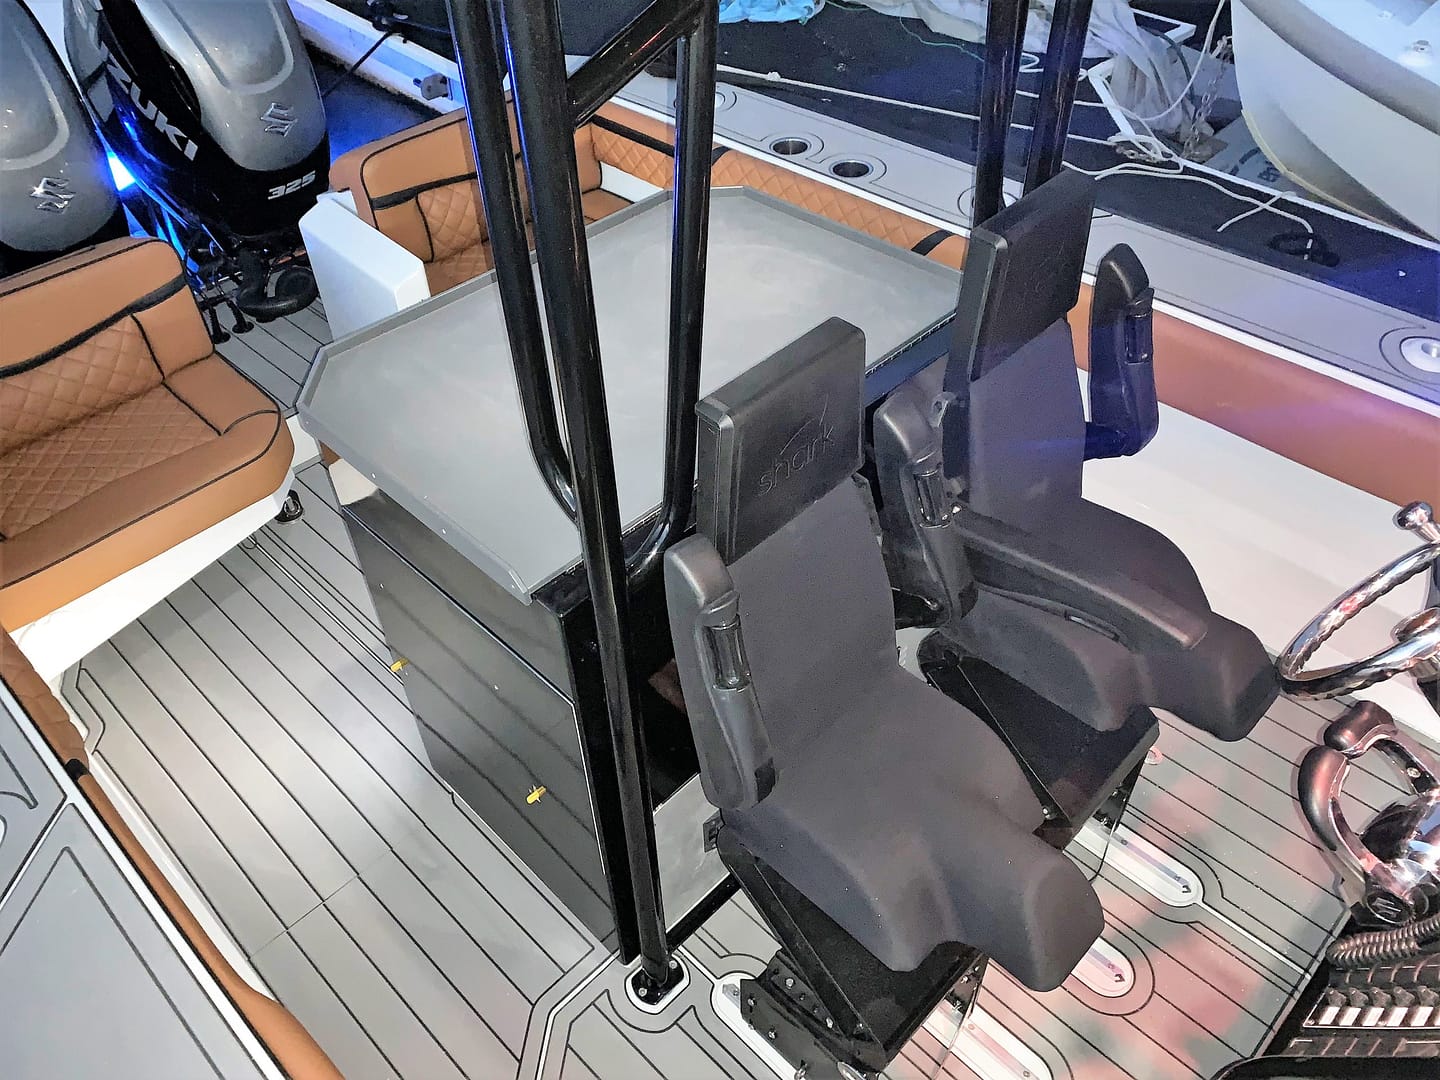 suspension seats and boat interior